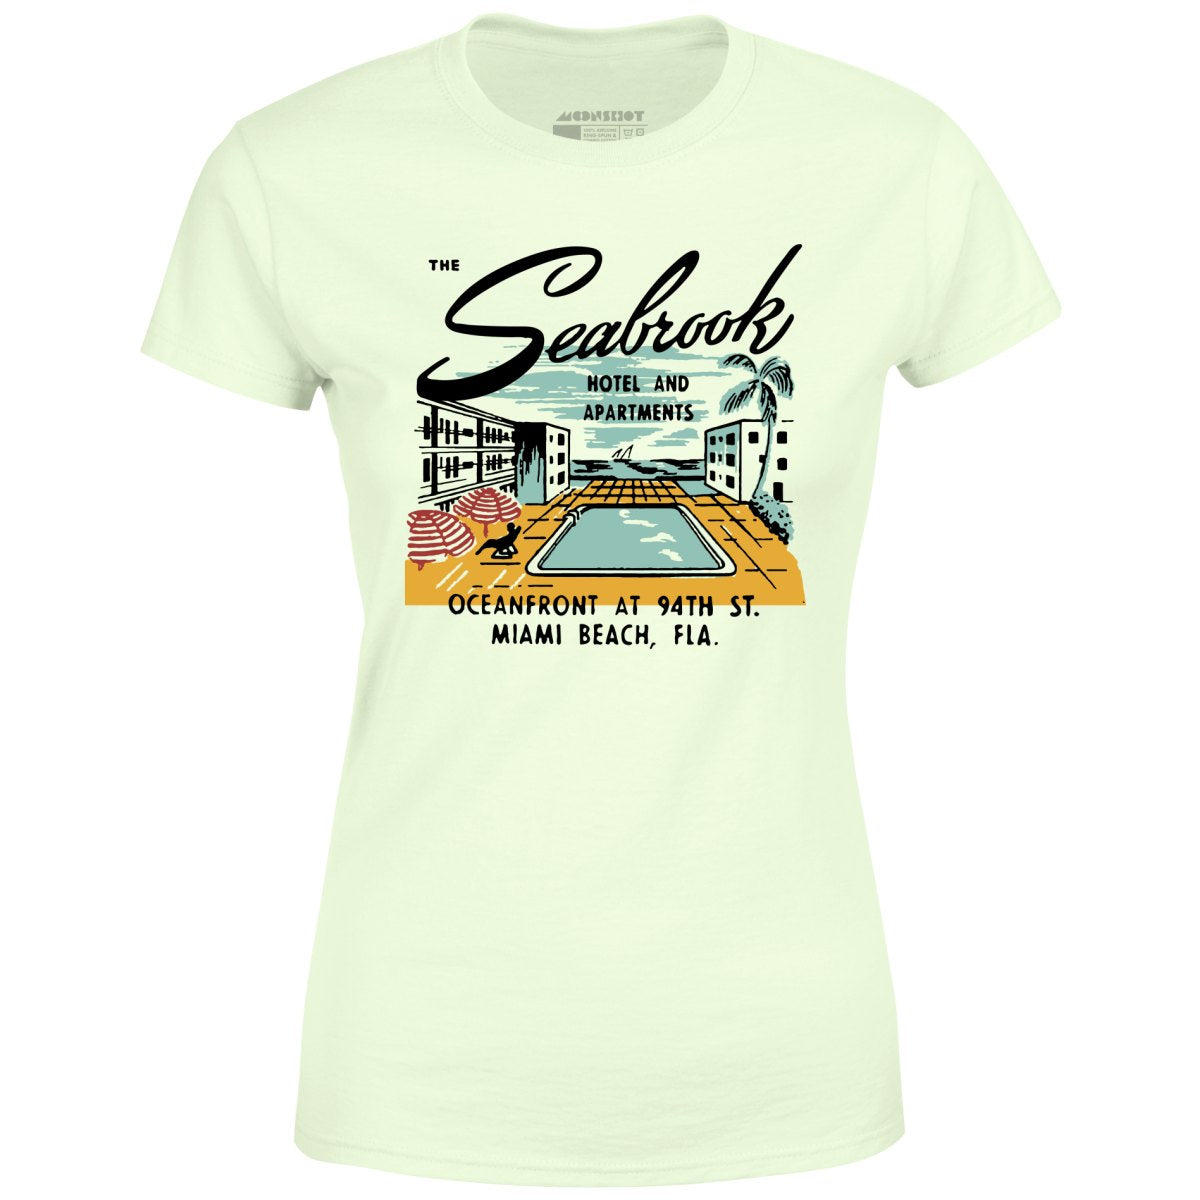 The Seabrook - Miami, FL - Vintage Hotel - Women's T-Shirt